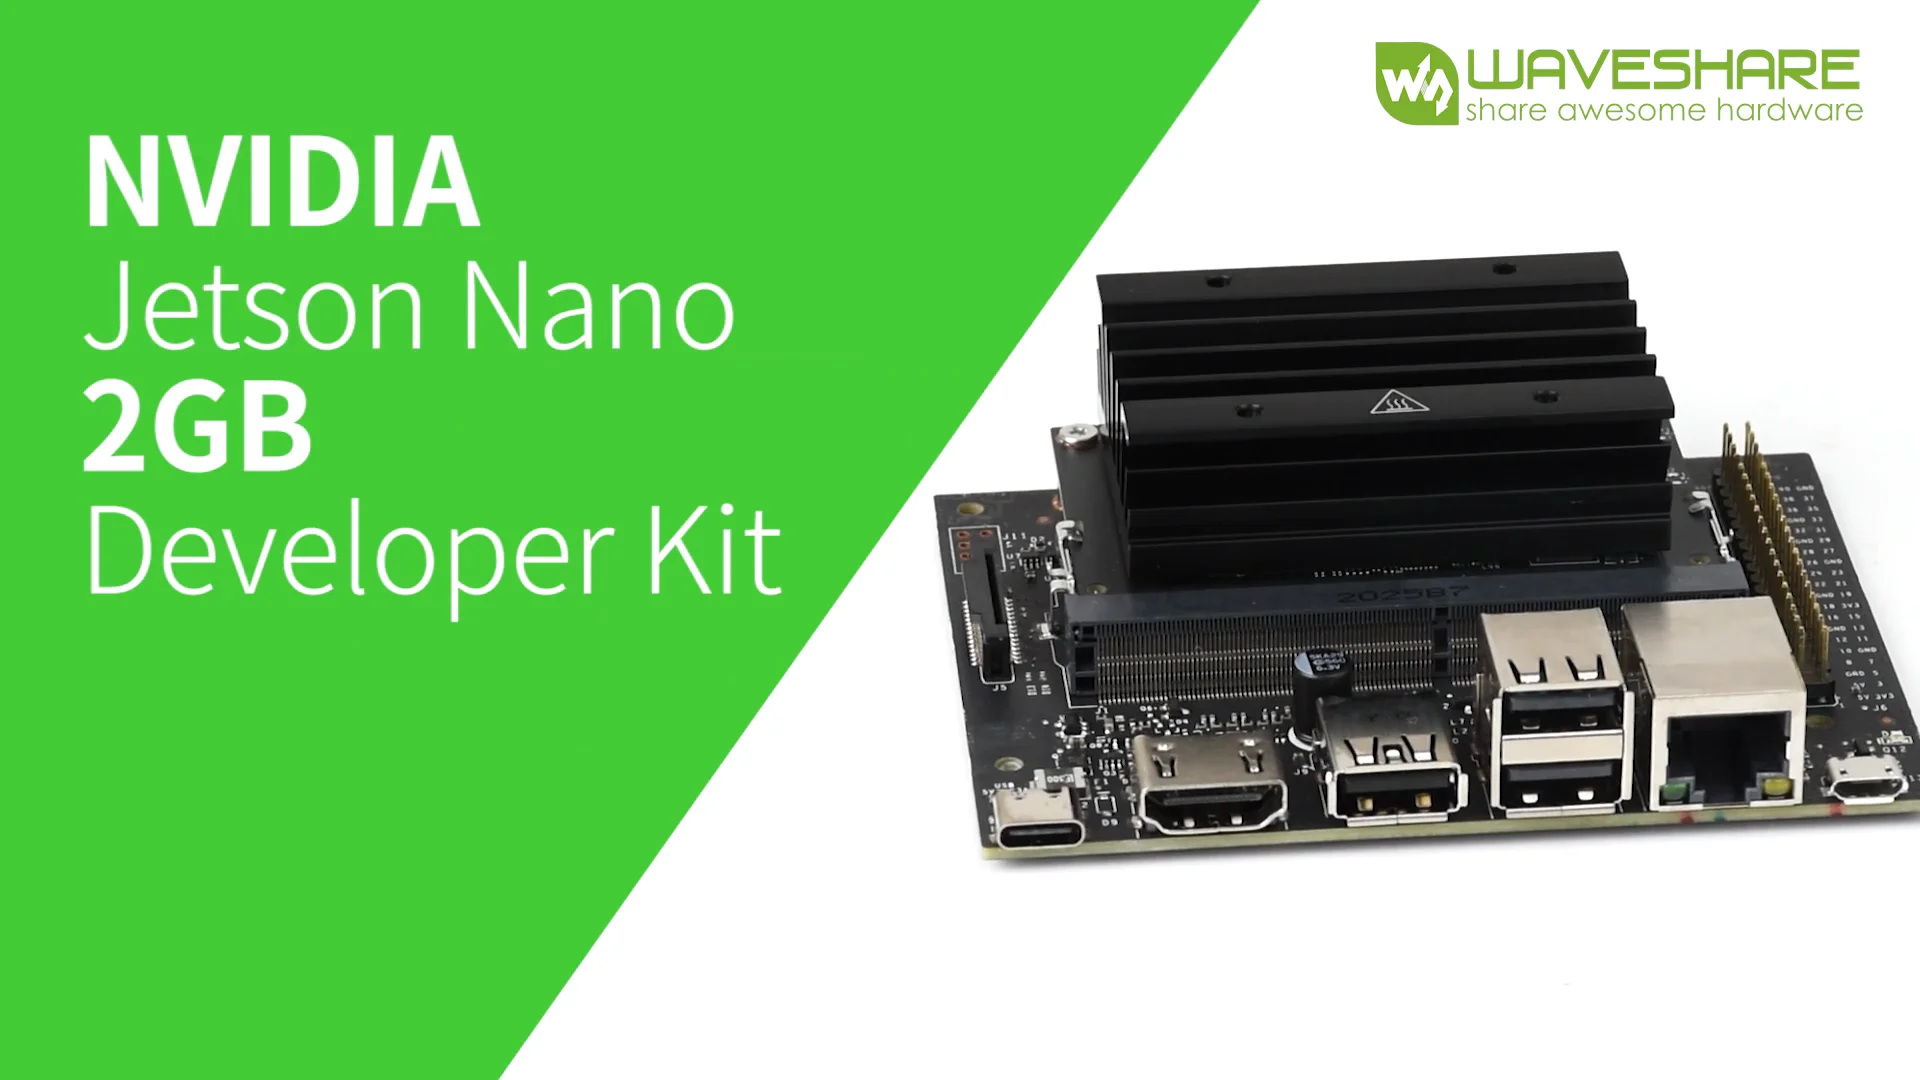 

NVIDIA Jetson Nano 2GB (Type C) Display Kit Suitable for Robotics Learning